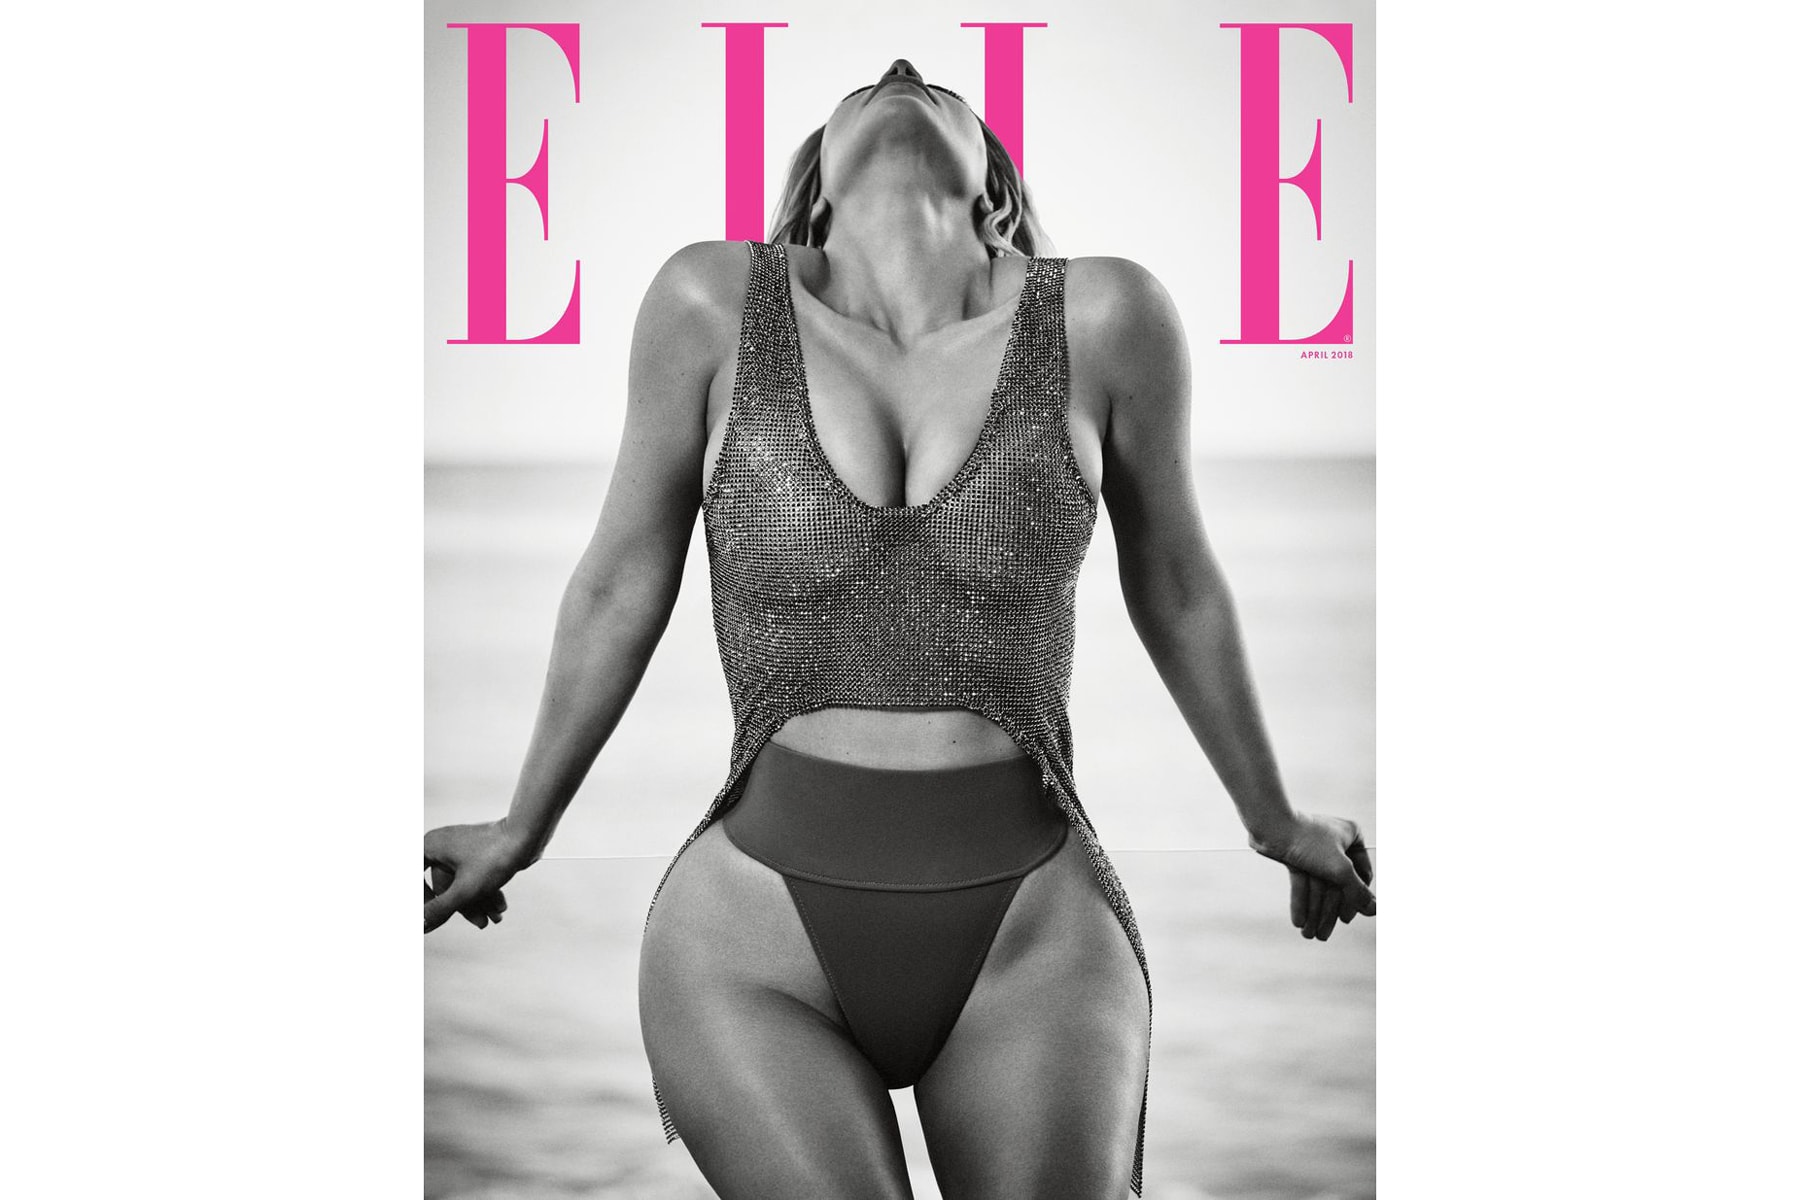 Kim Kardashian West Elle Magazine cover April 2018 cover issue magazine interview feature